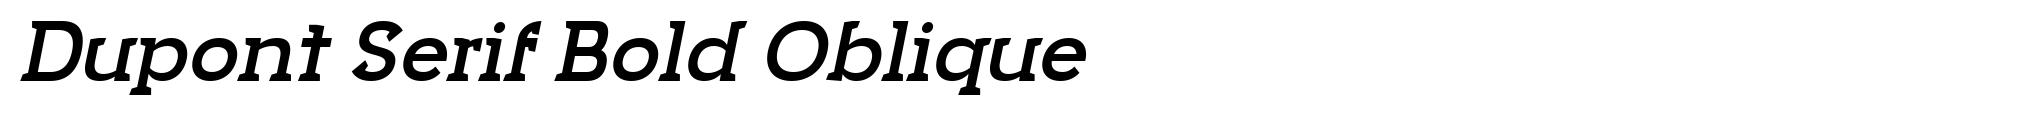 Dupont Serif Bold Oblique image